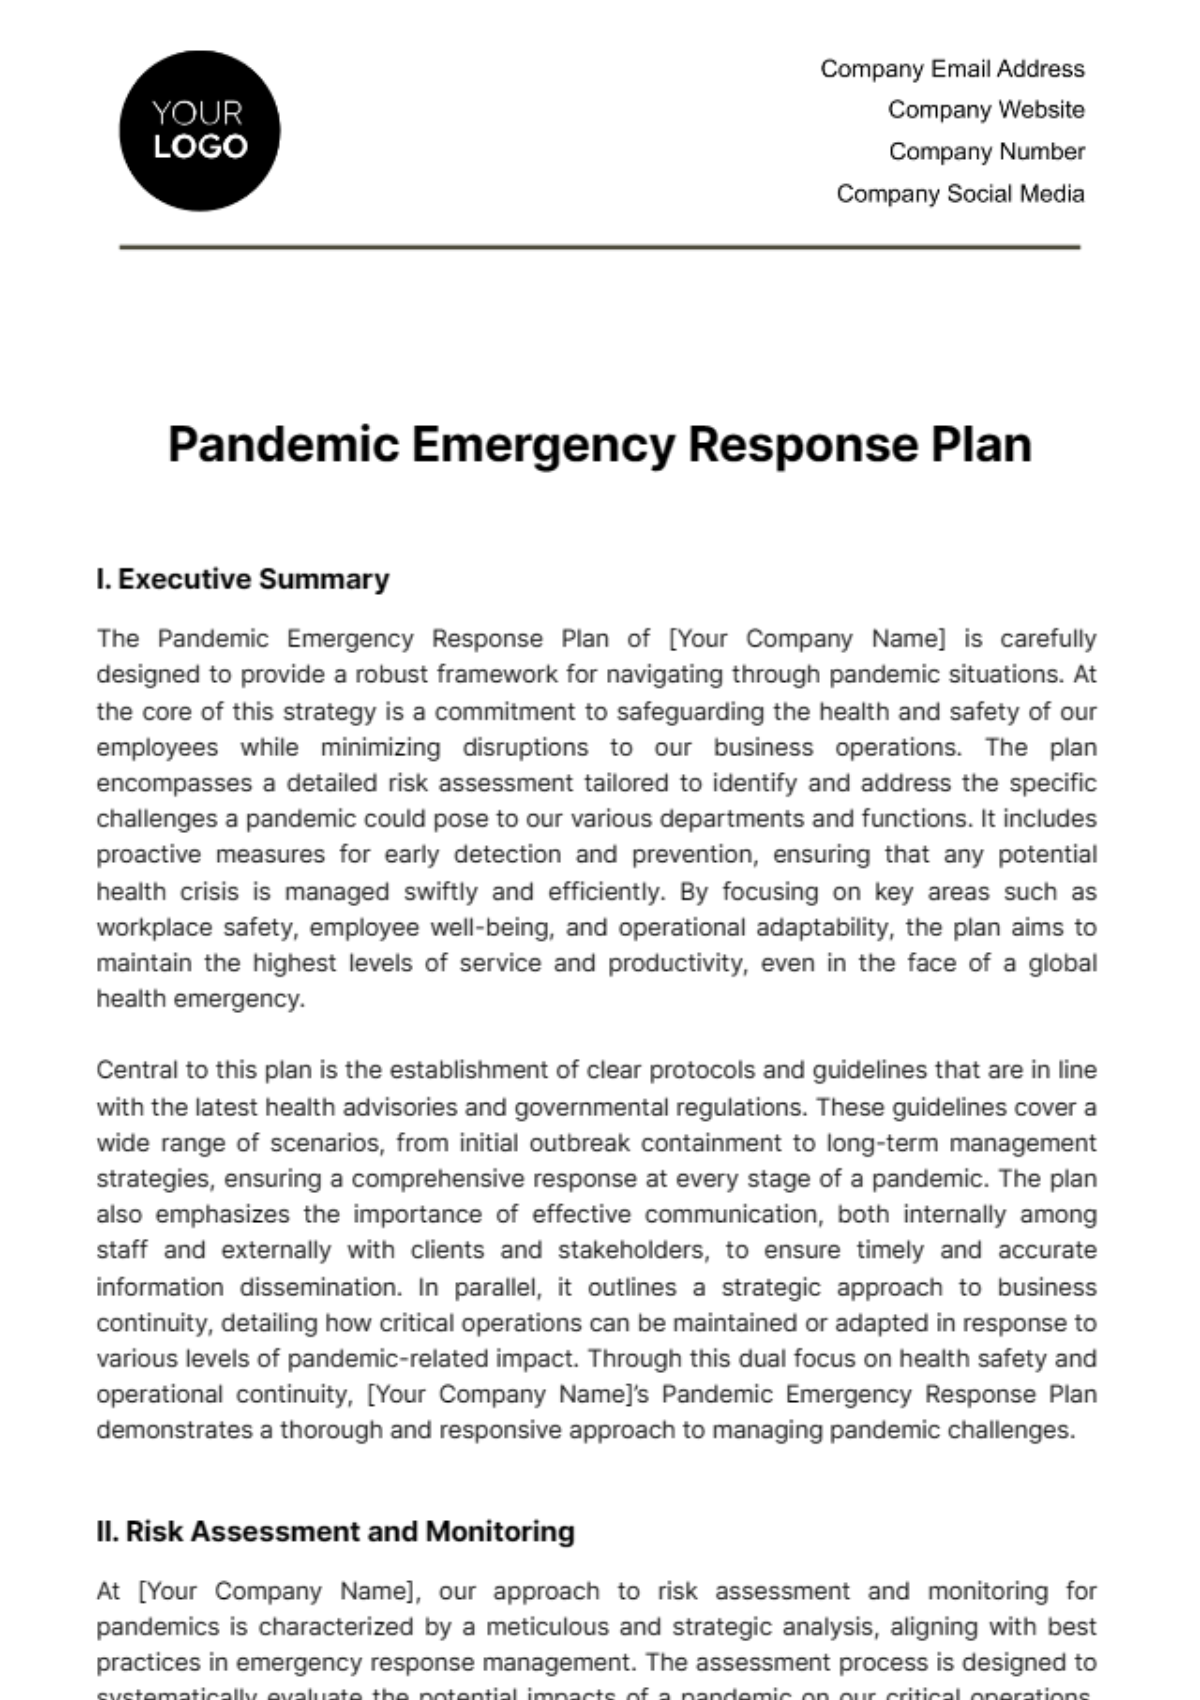 Pandemic Emergency Response Plan Template